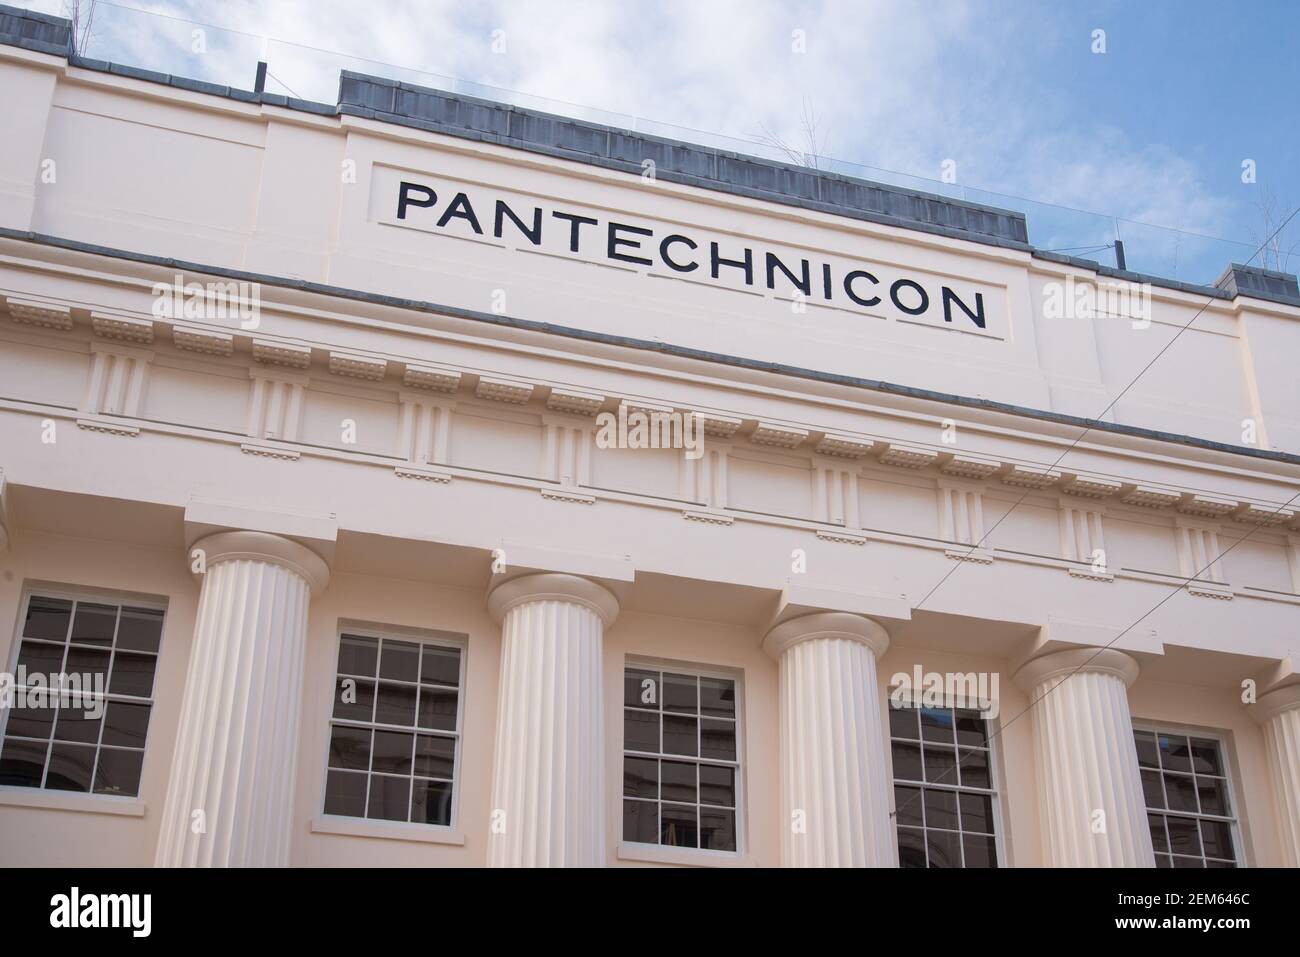 Pantechnicon Greek Revival Architecture Stock Photo